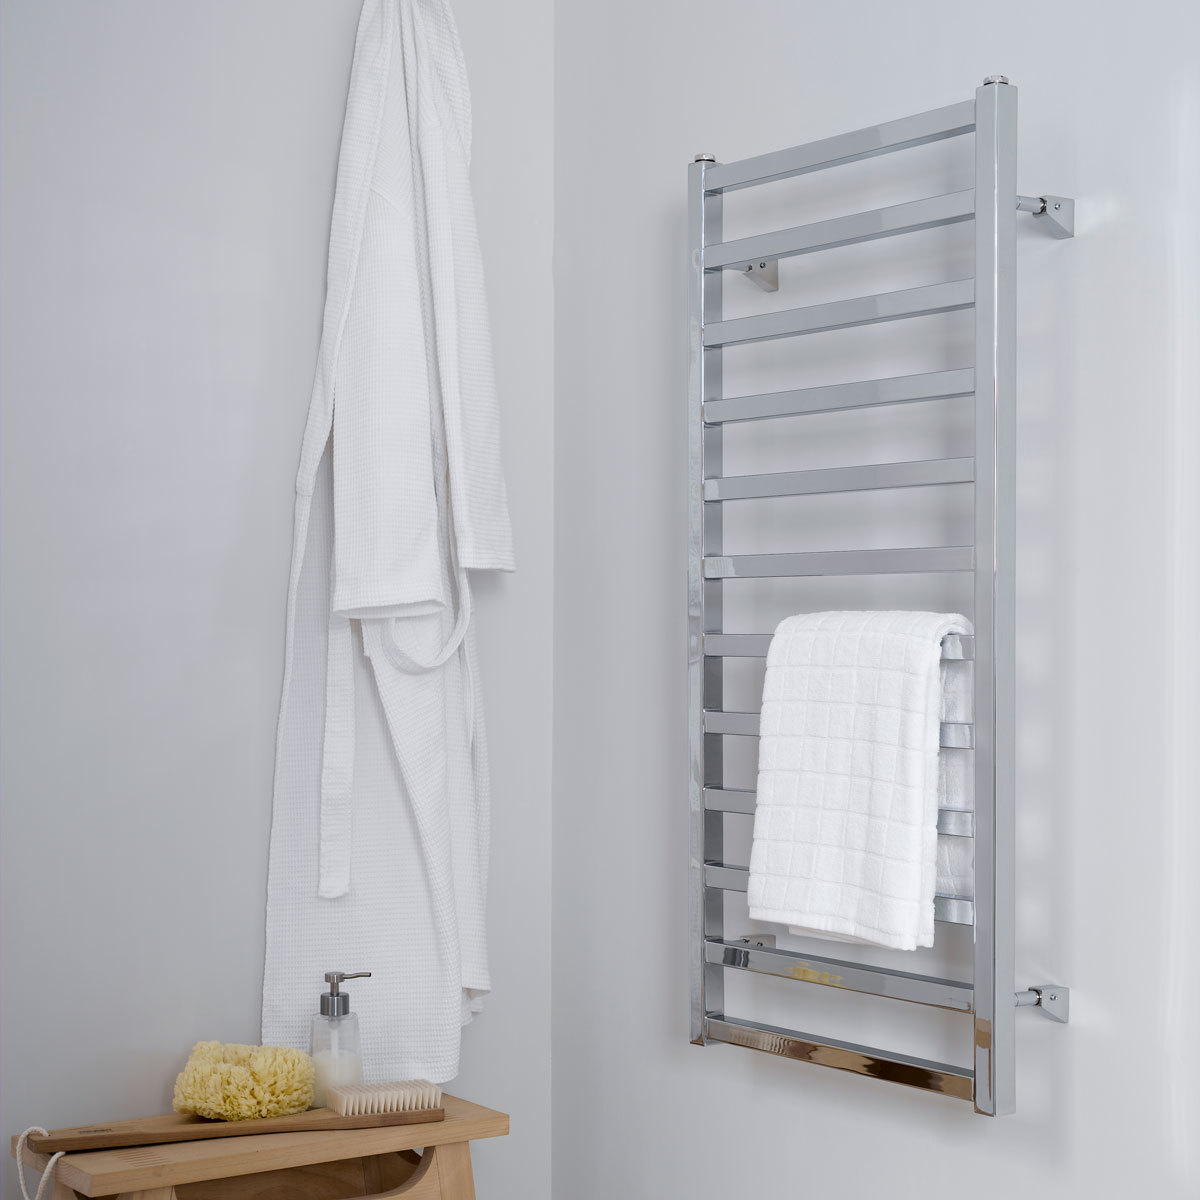 Lifestyle image of radiator in bathroom setting